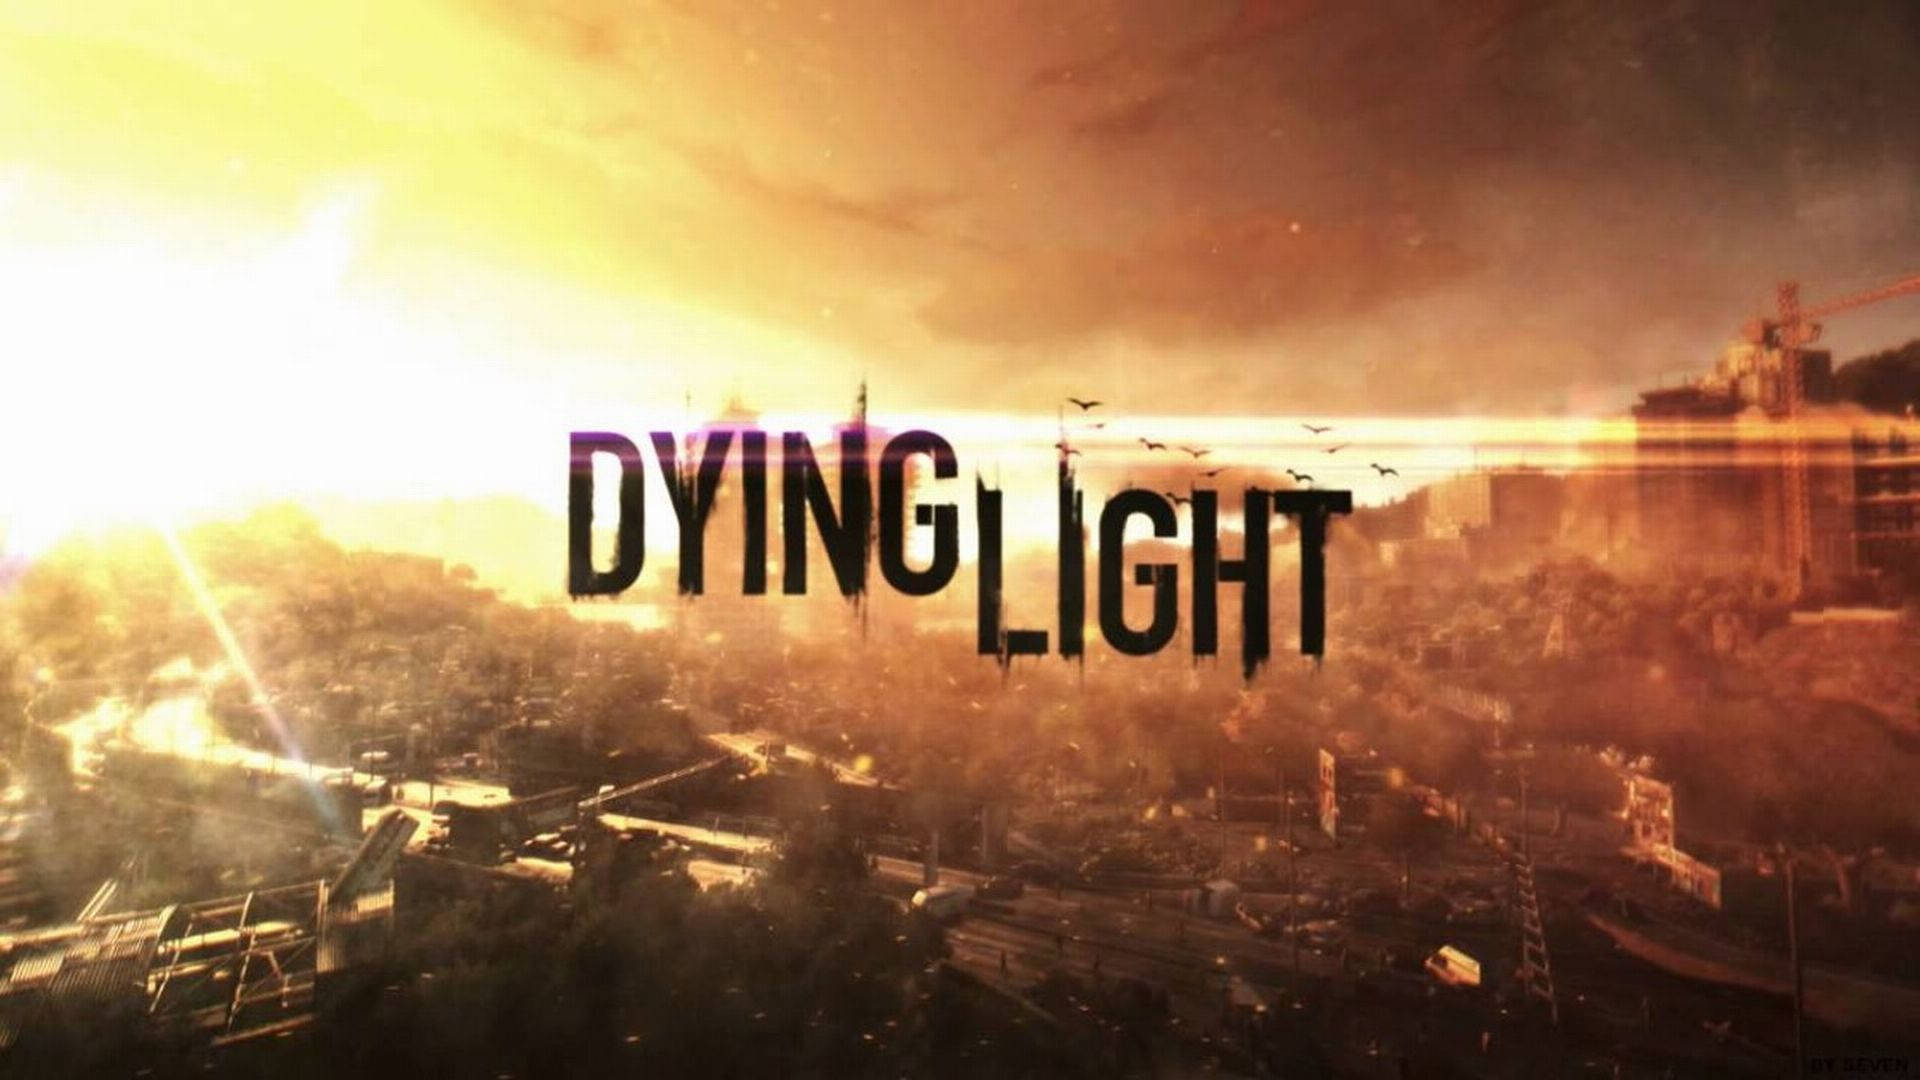 Dying Light Eerie City Wallpaper